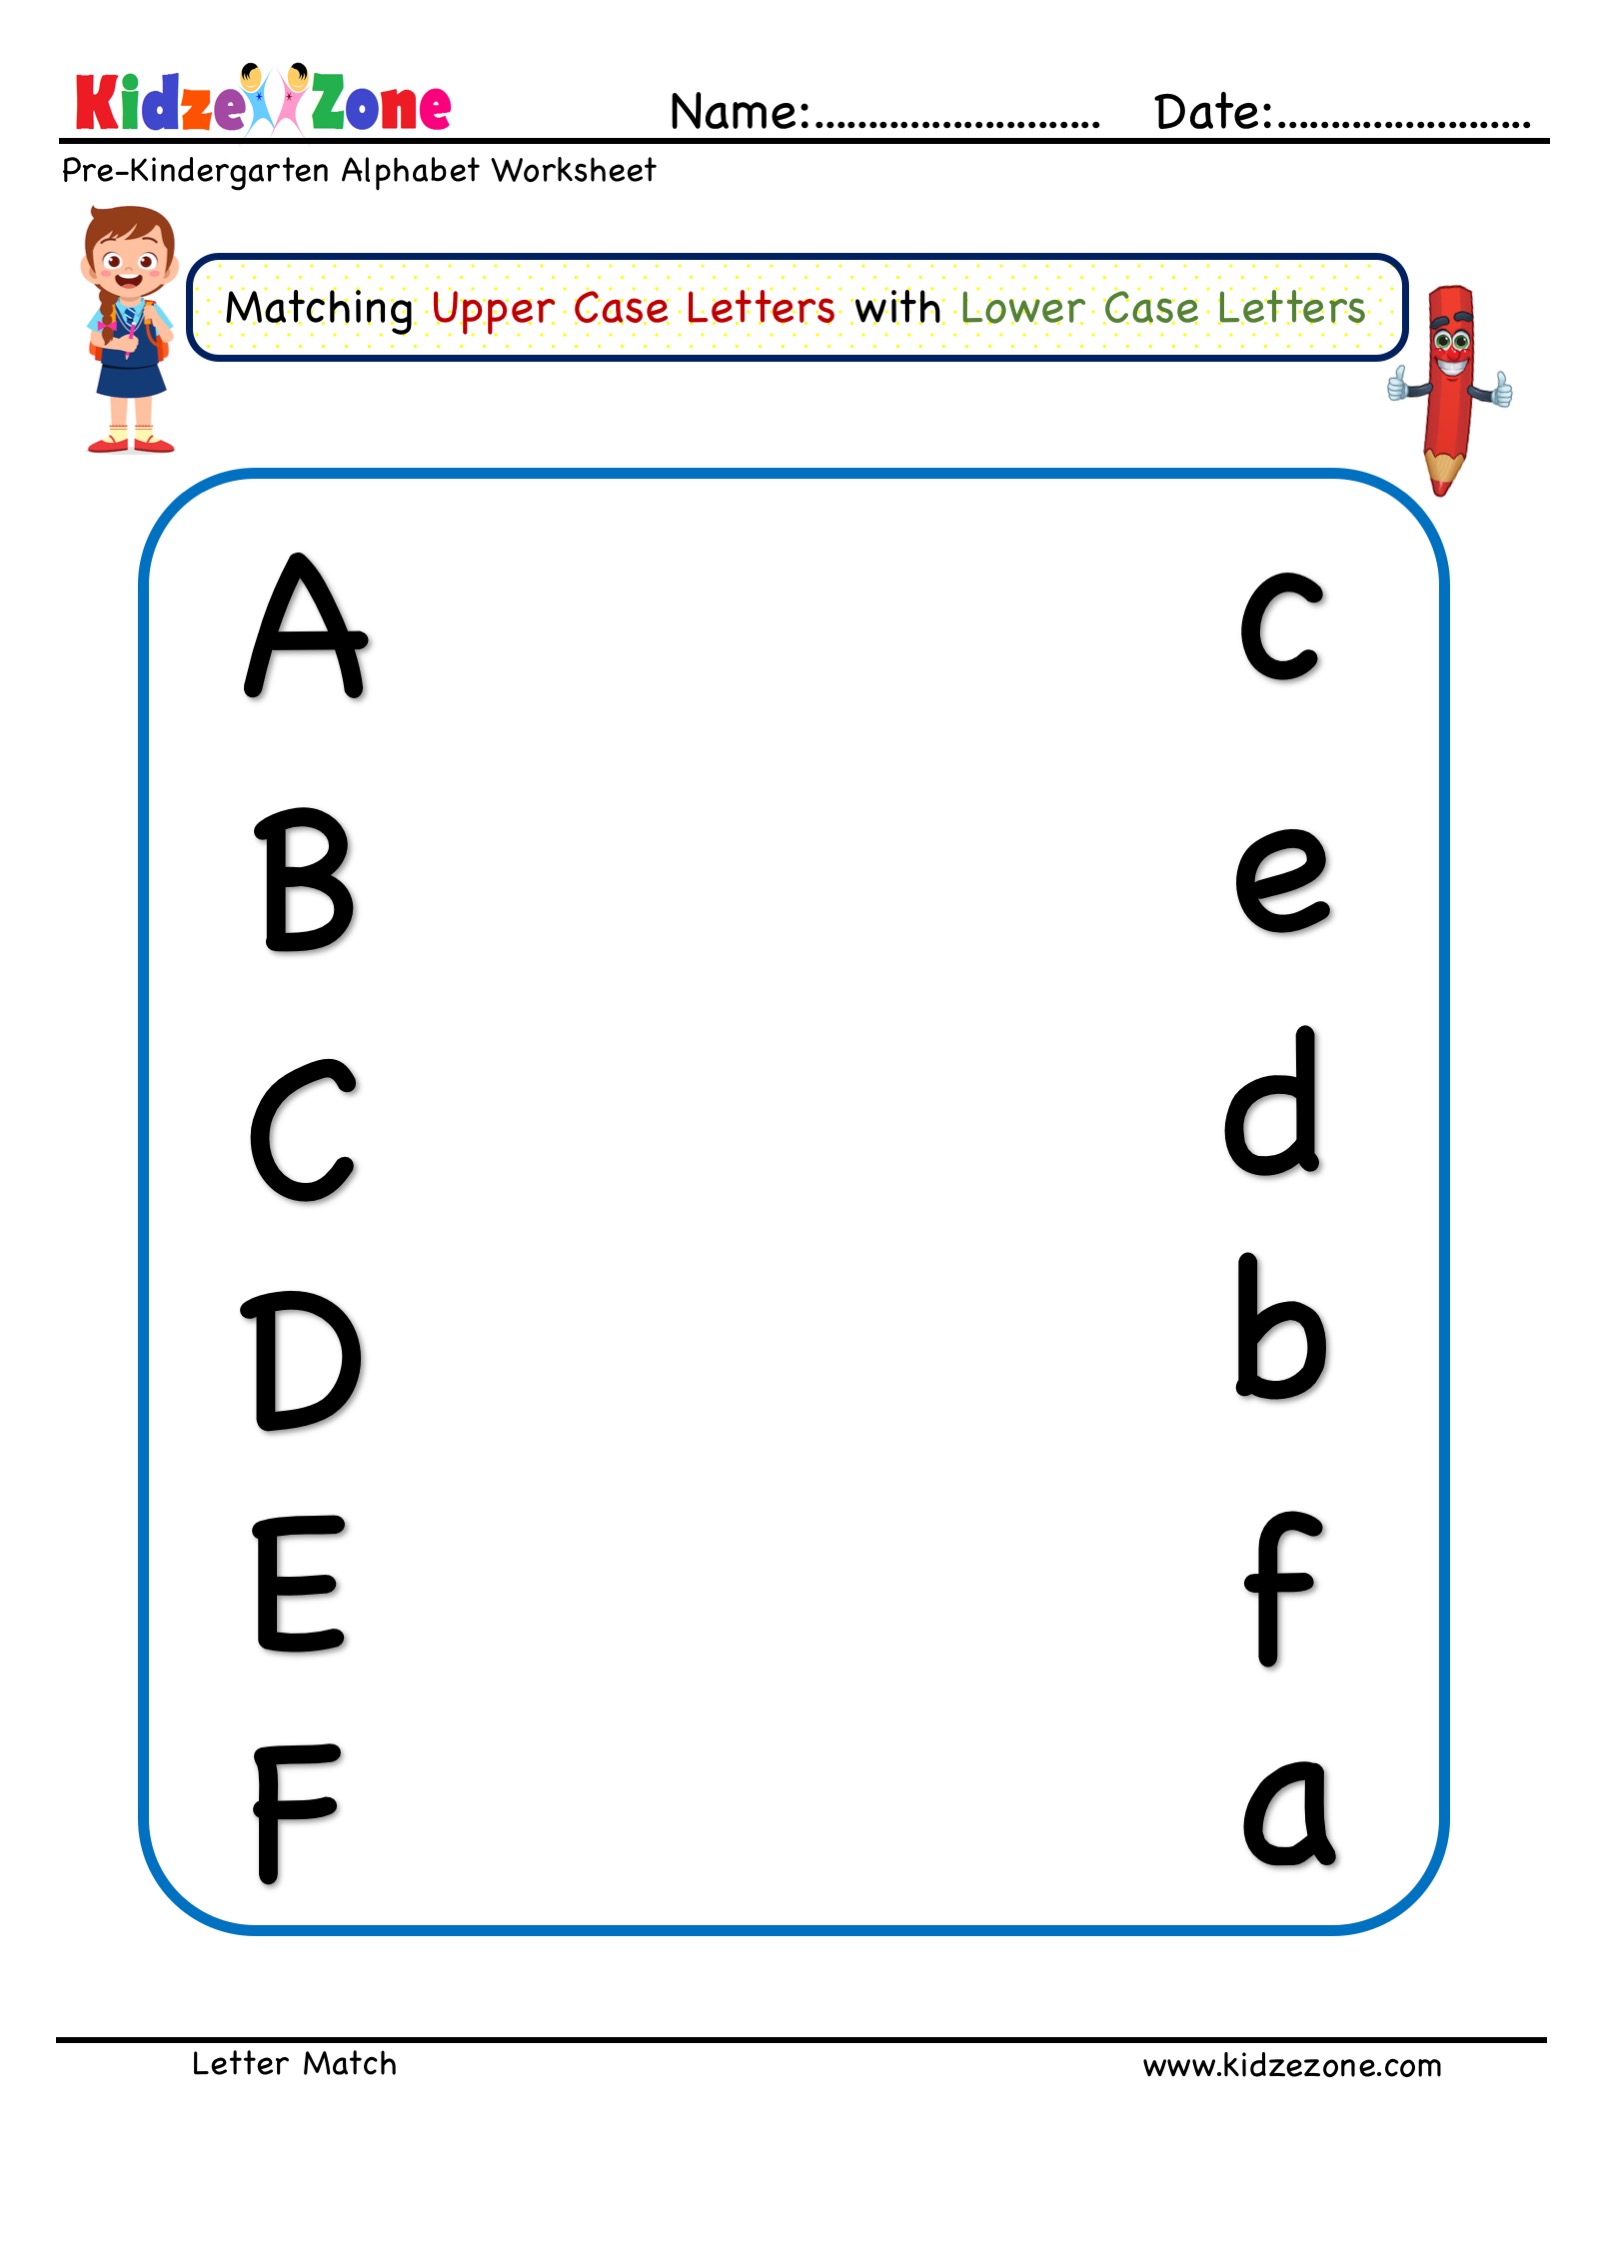 Preschool Letter Matching Worksheet Upper Case to Lower Case Letter